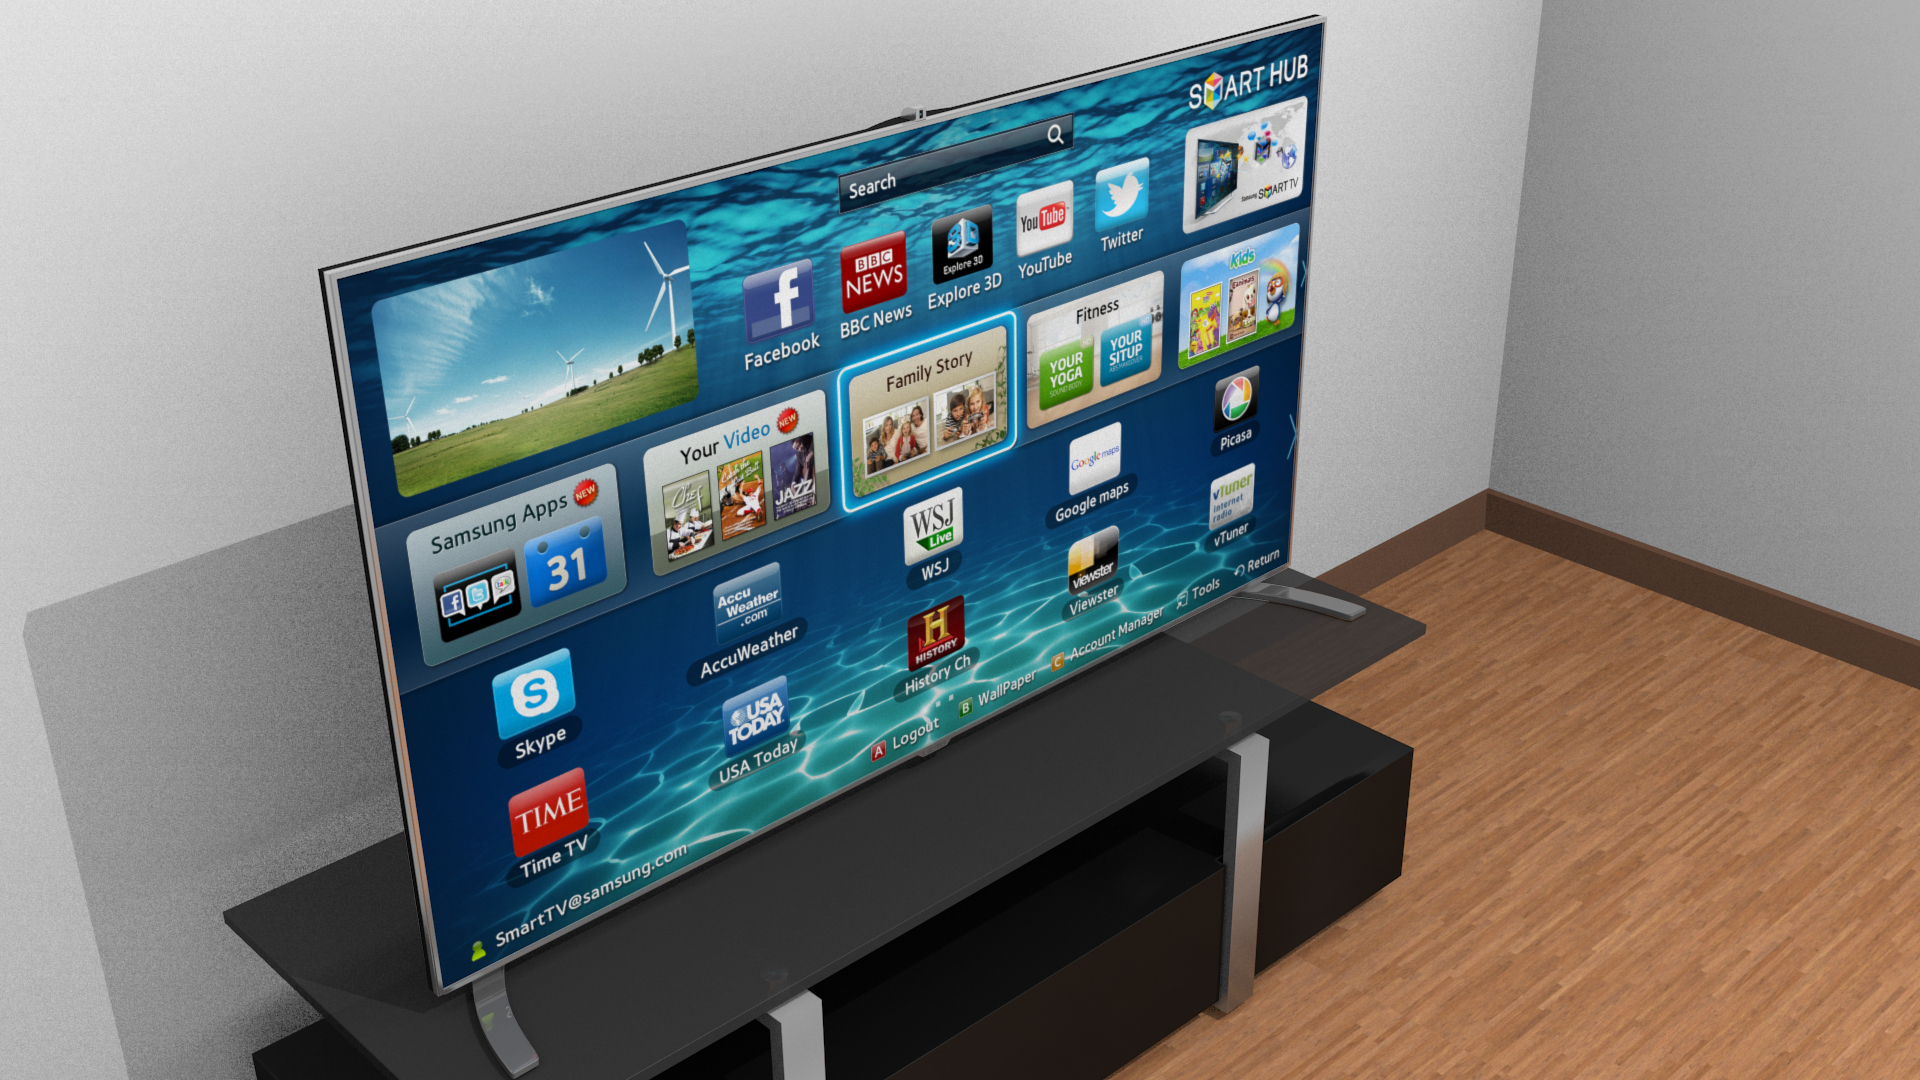 Топ телевизоров на андроид. Samsung Smart TV f8000. Samsung Smart TV 43. Samsung Smart TV с650. Samsung Smart TV 45".